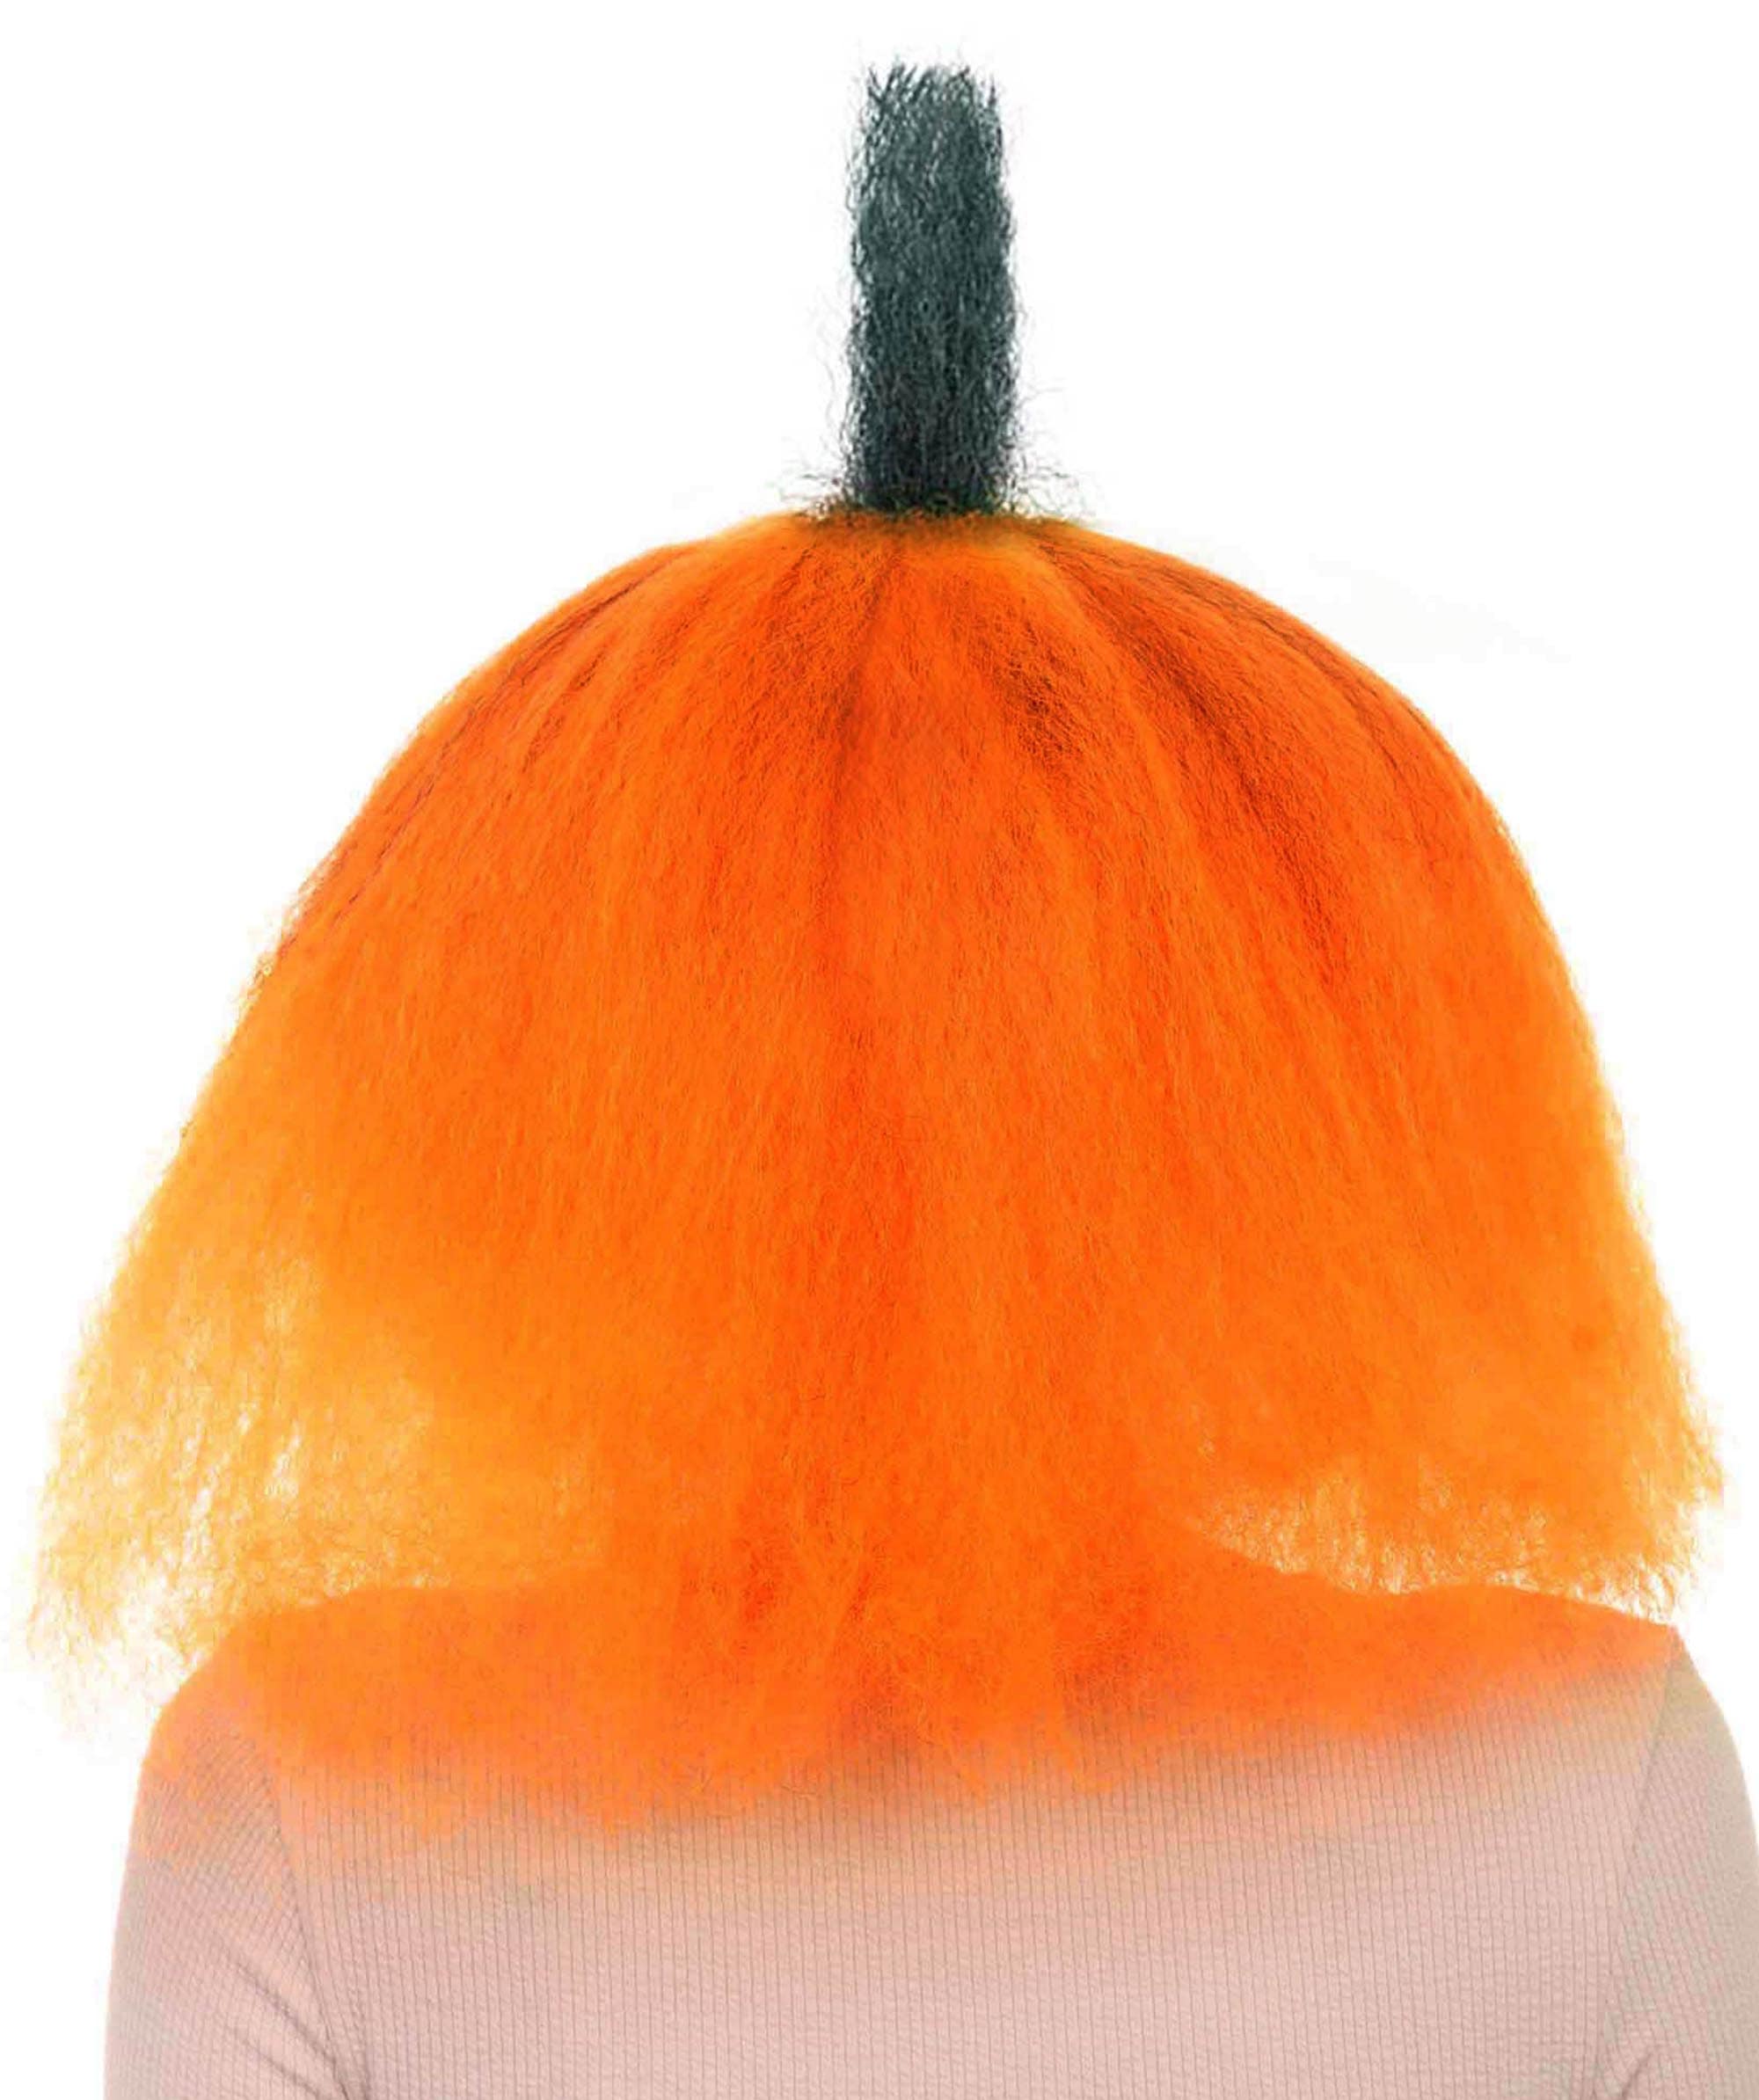 Halloween Pumpkin Woman Wig | Fruit Vegetables Cosplay Halloween Wig | Premium Breathable Capless Cap